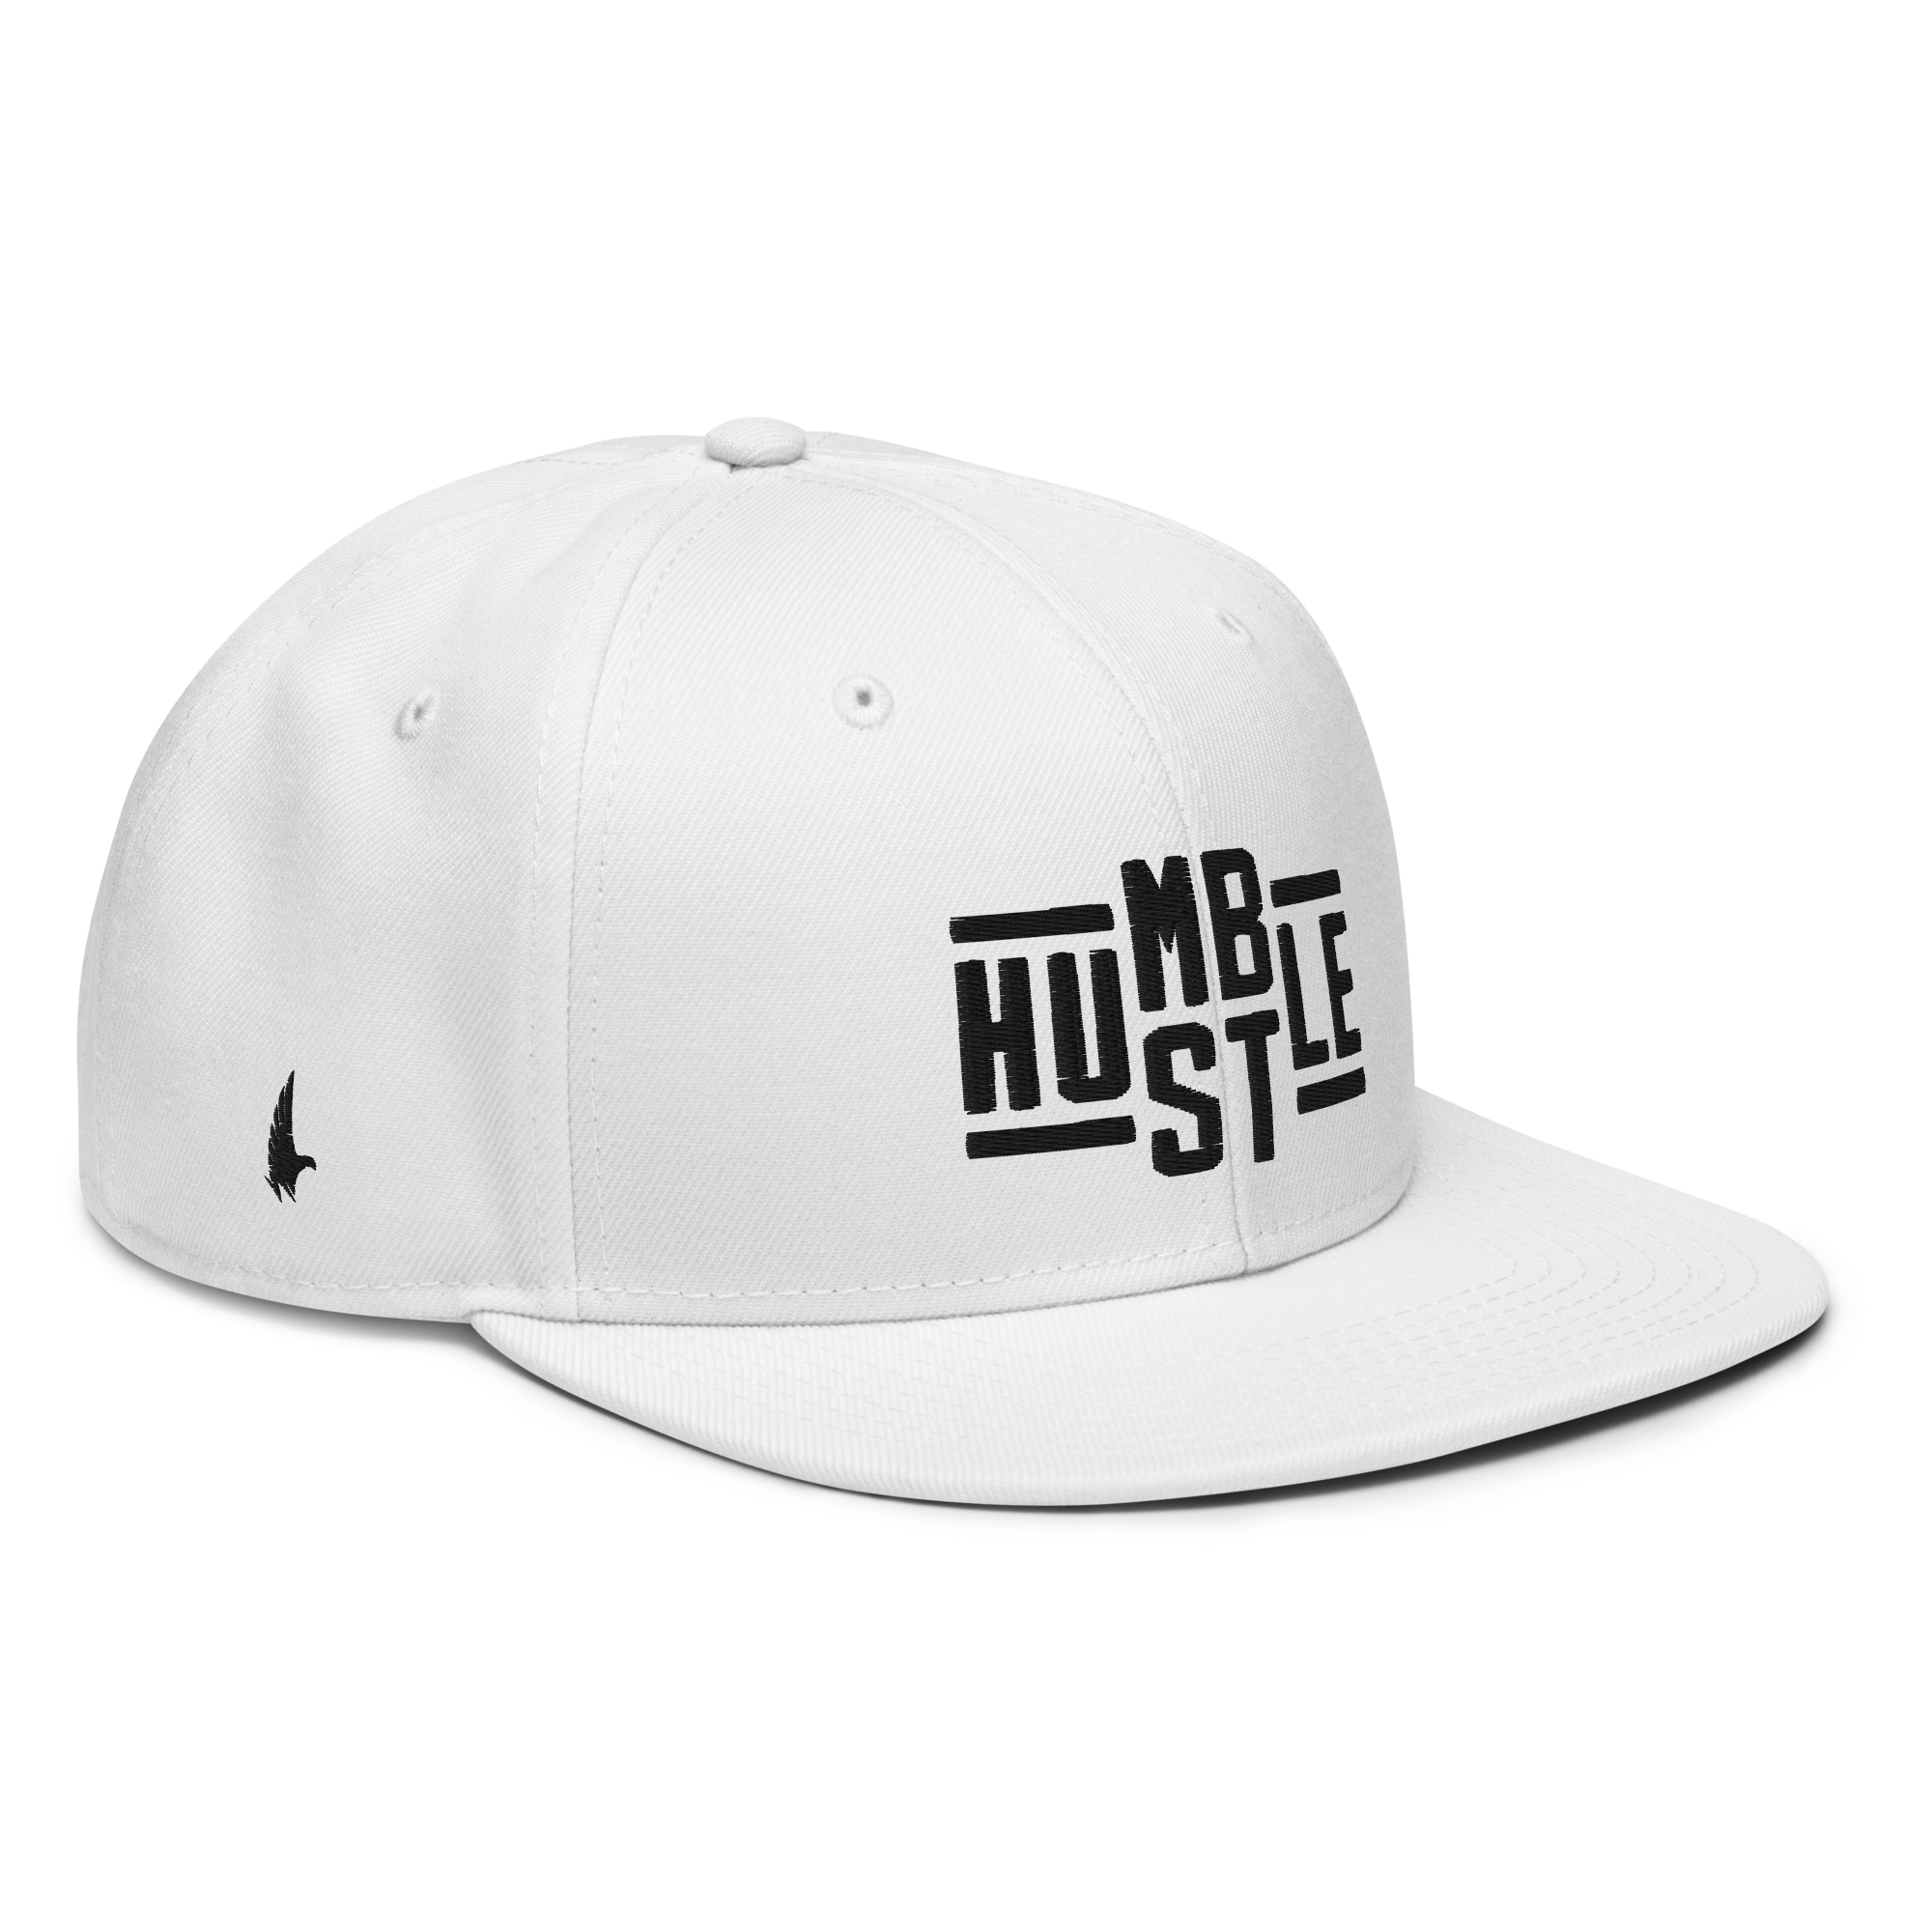 Hustle Snapback Hat White/Black OS - Loyalty Vibes